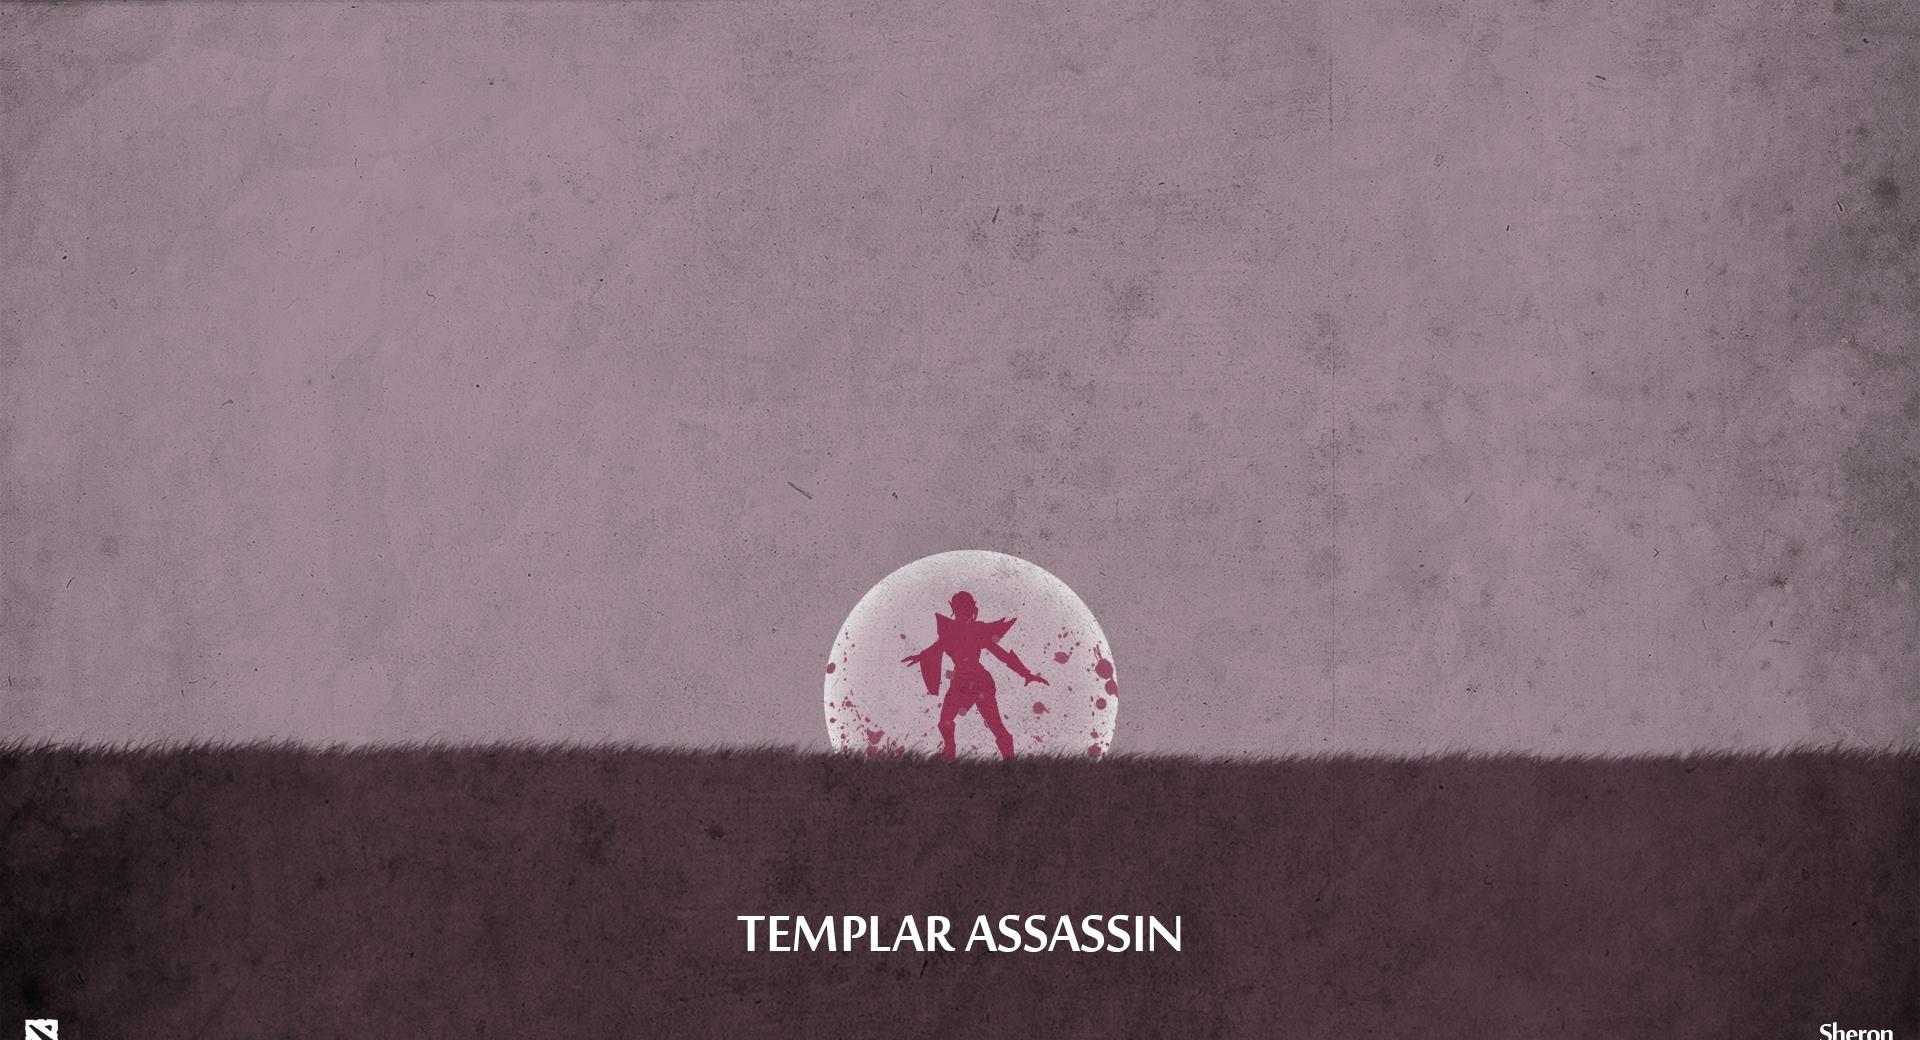 Templar Assassin - DotA 2 at 1024 x 1024 iPad size wallpapers HD quality